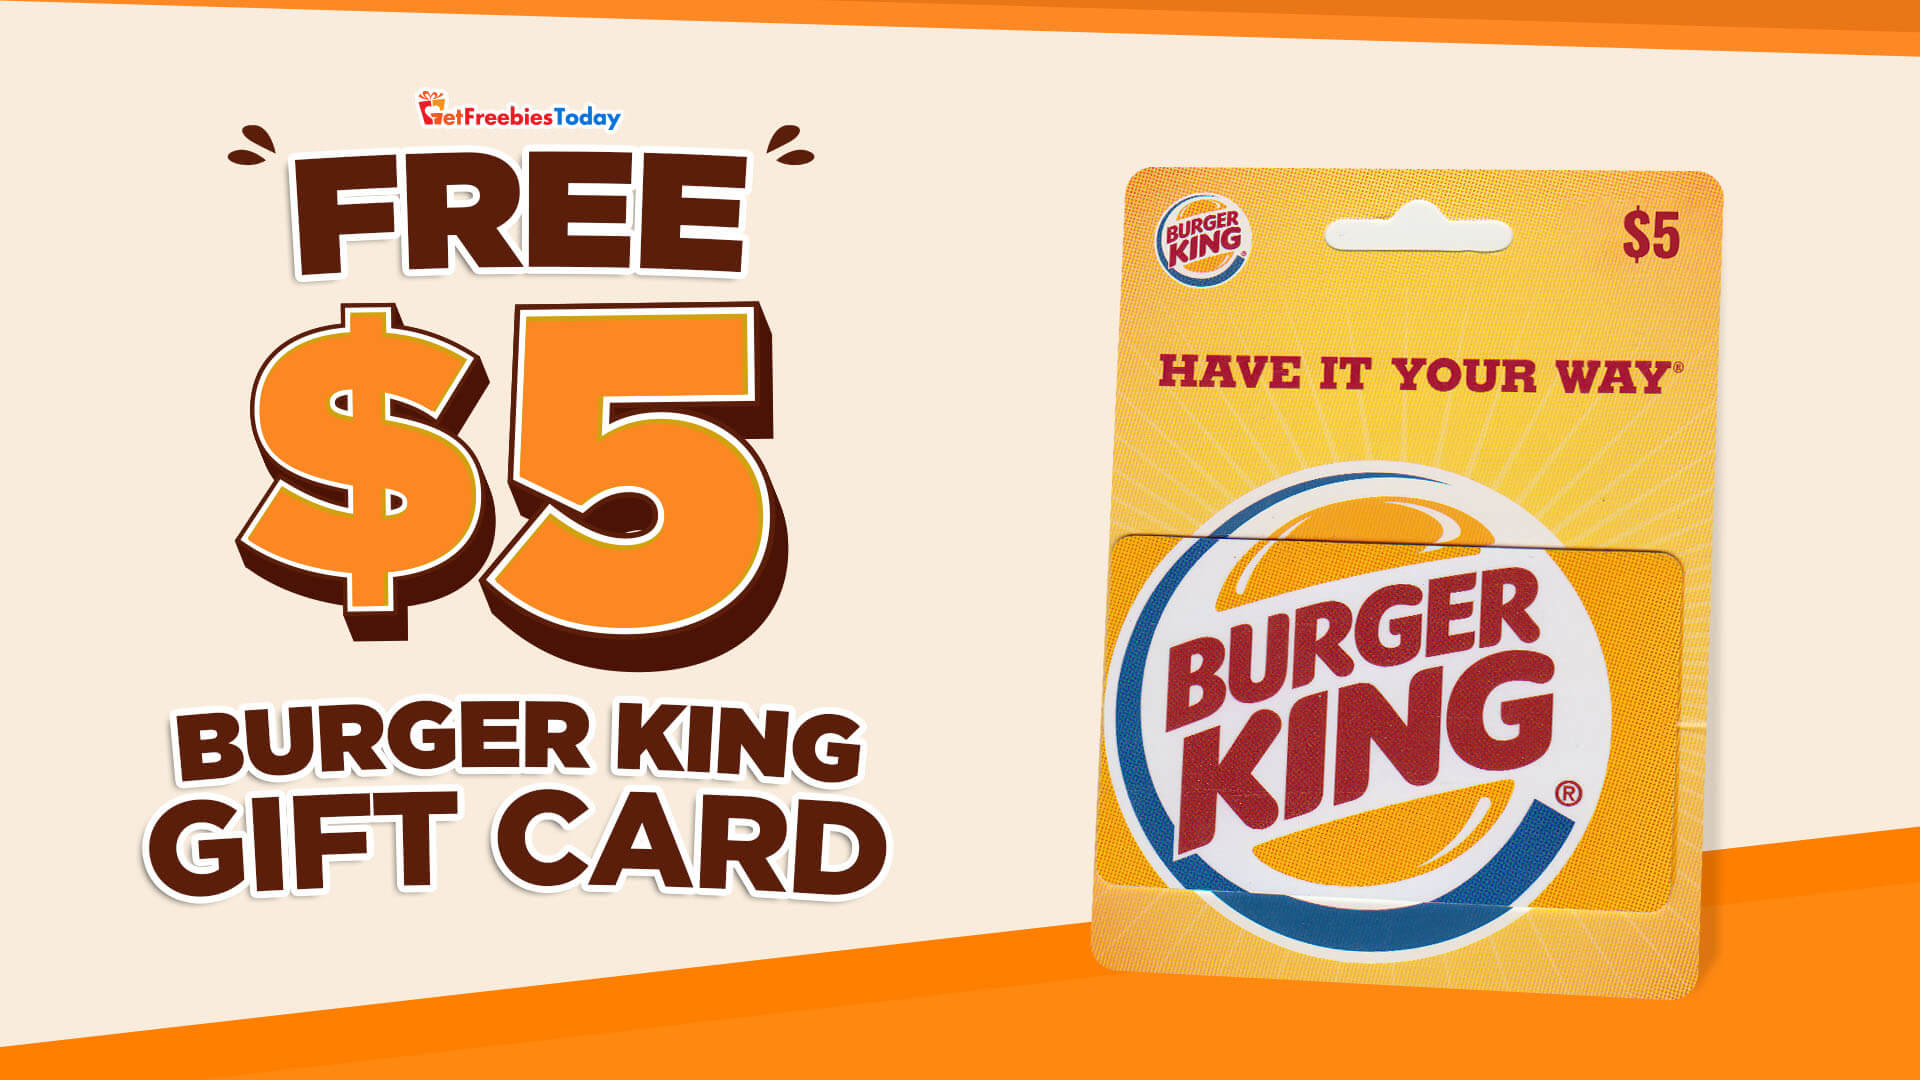 Free $5 Burger King Gift Card | GetFreebiesToday.com